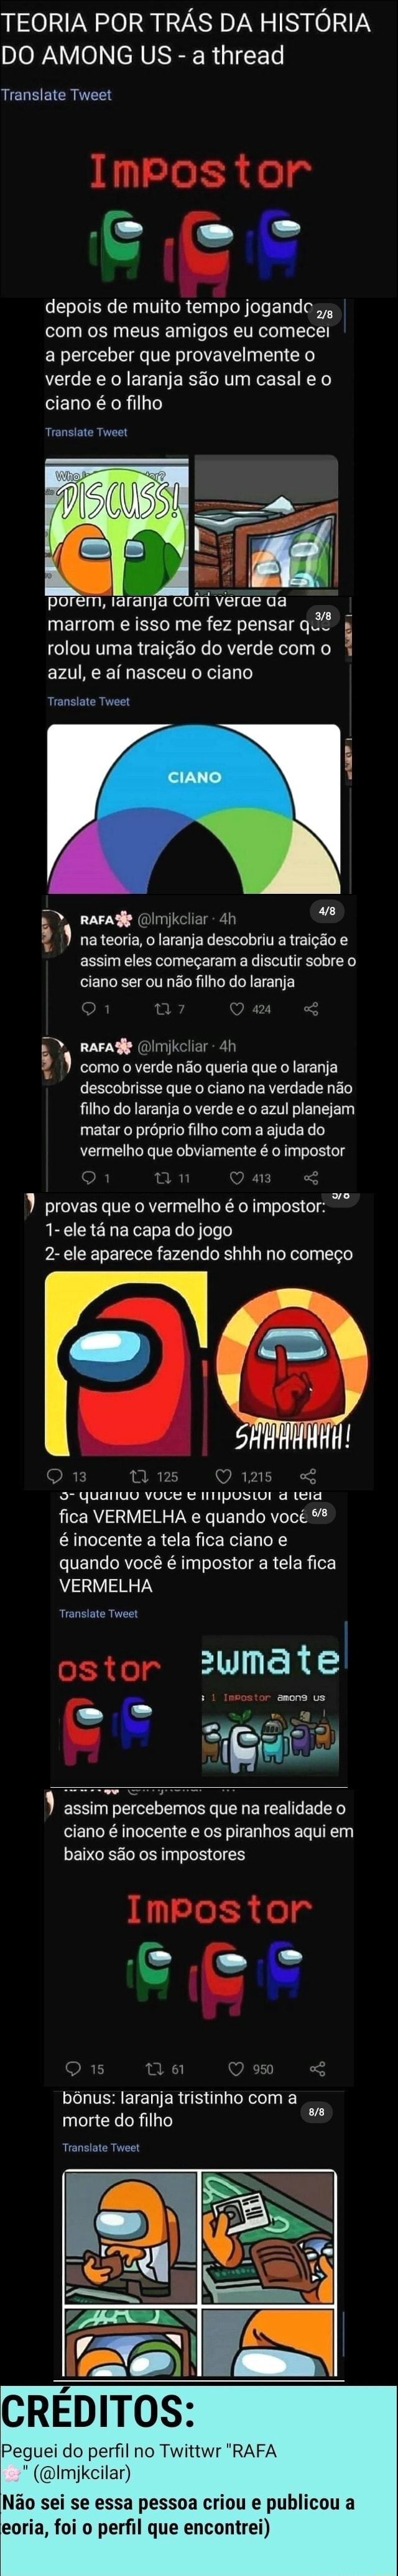 Sempre é o ciano! - Memes among Us brasil